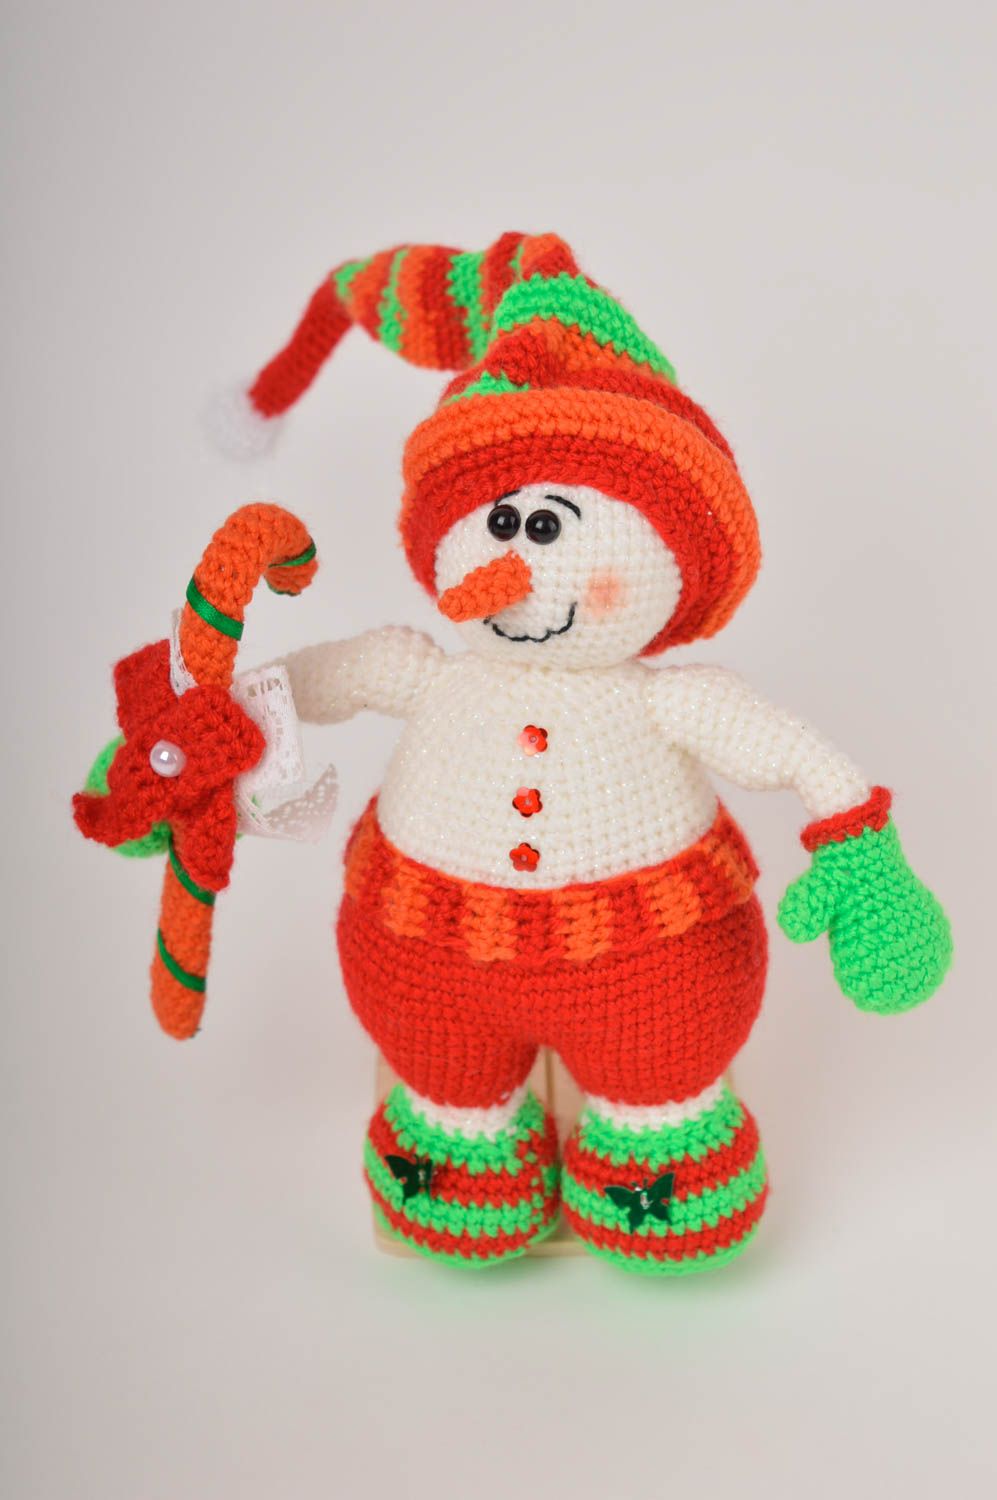 Festive toy for Christmas handmade crocheted toy for babied nursery decor photo 3